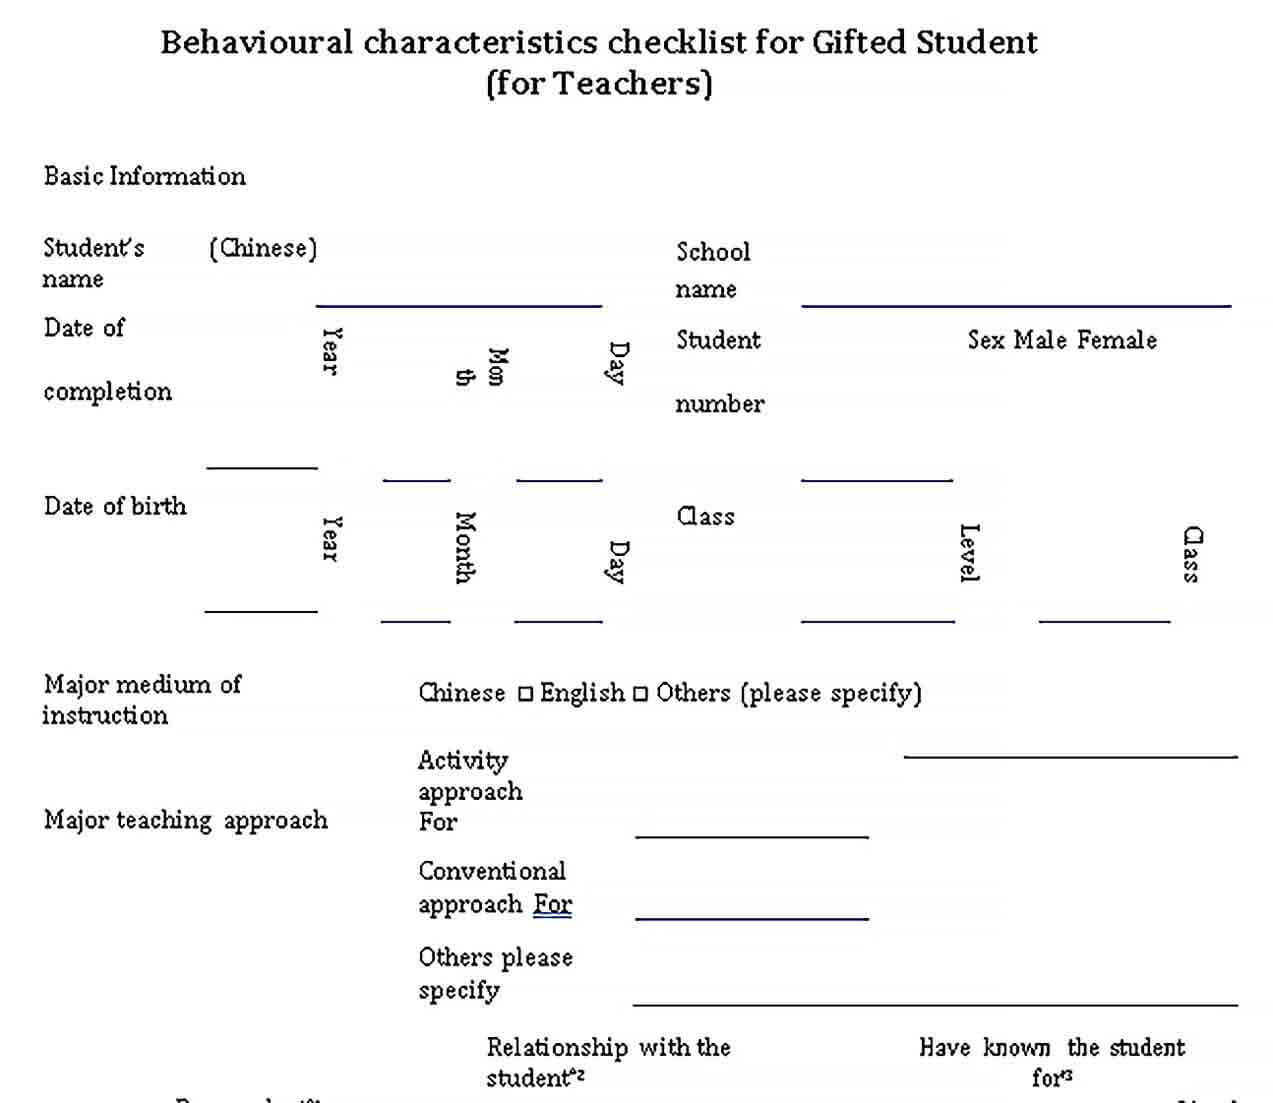 Sample Gifted Child Behavior Checklist